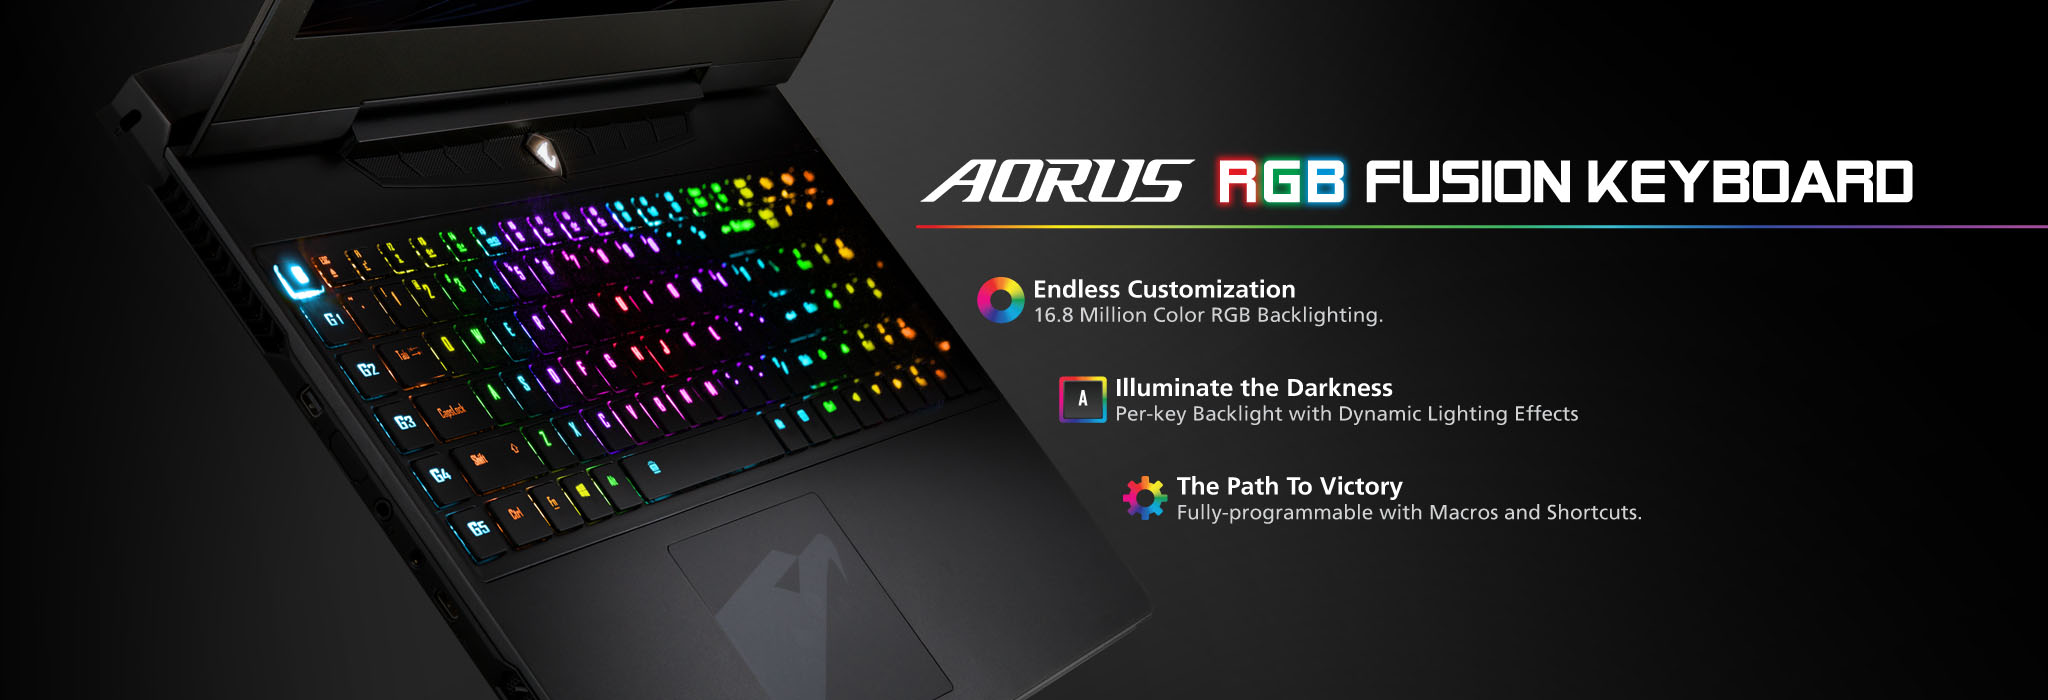 Seagull Mainstream Merchandising AORUS Announces RGB Fusion Keyboard and the Award Winning X7 DT at Computex  2016 | AORUS